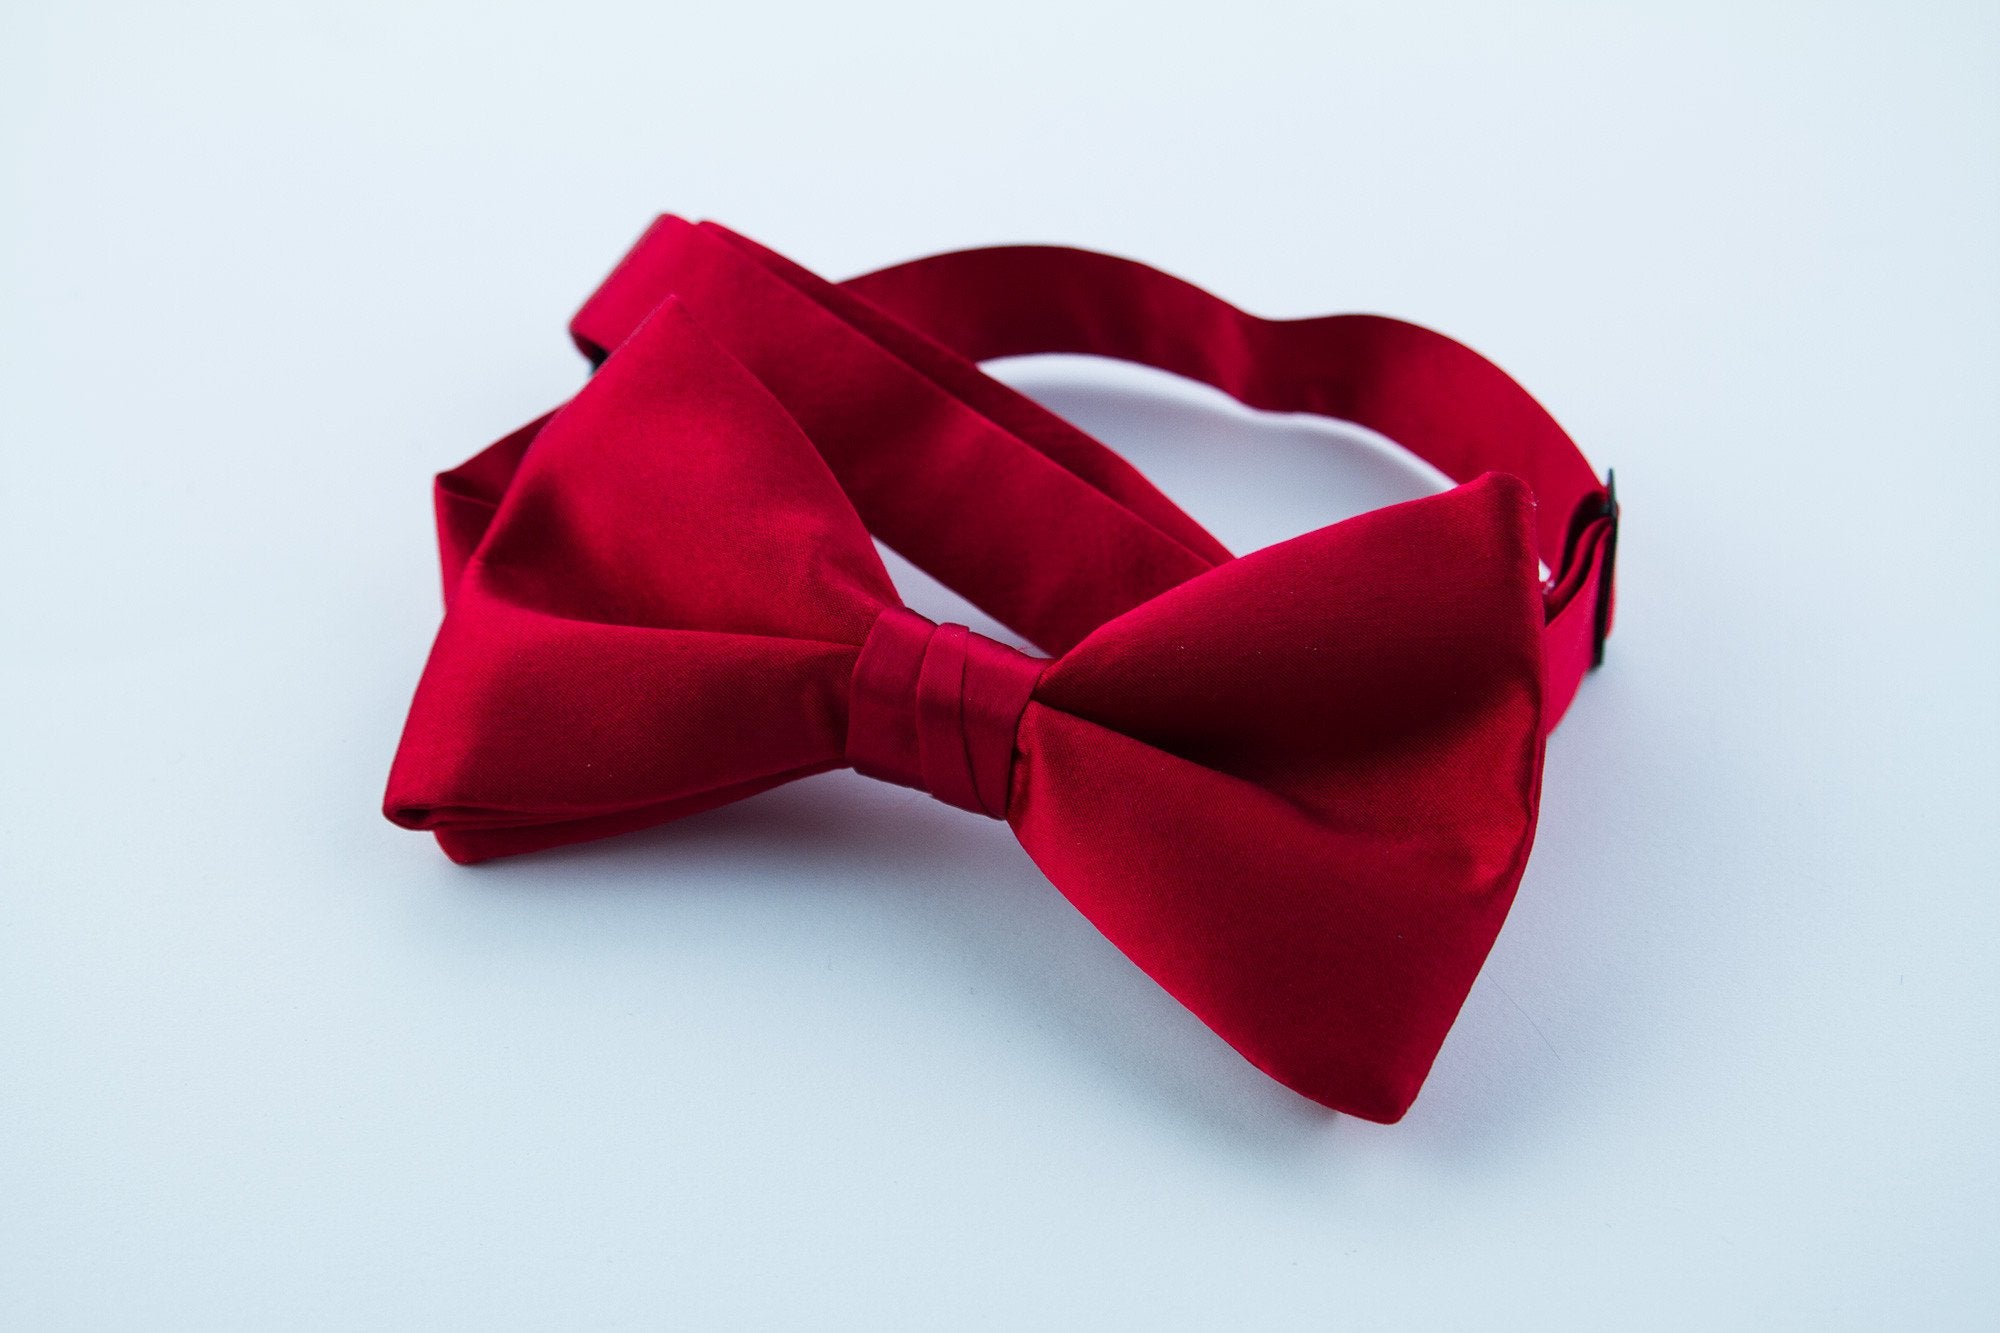 Red Silk Pre-tied Bow Tie